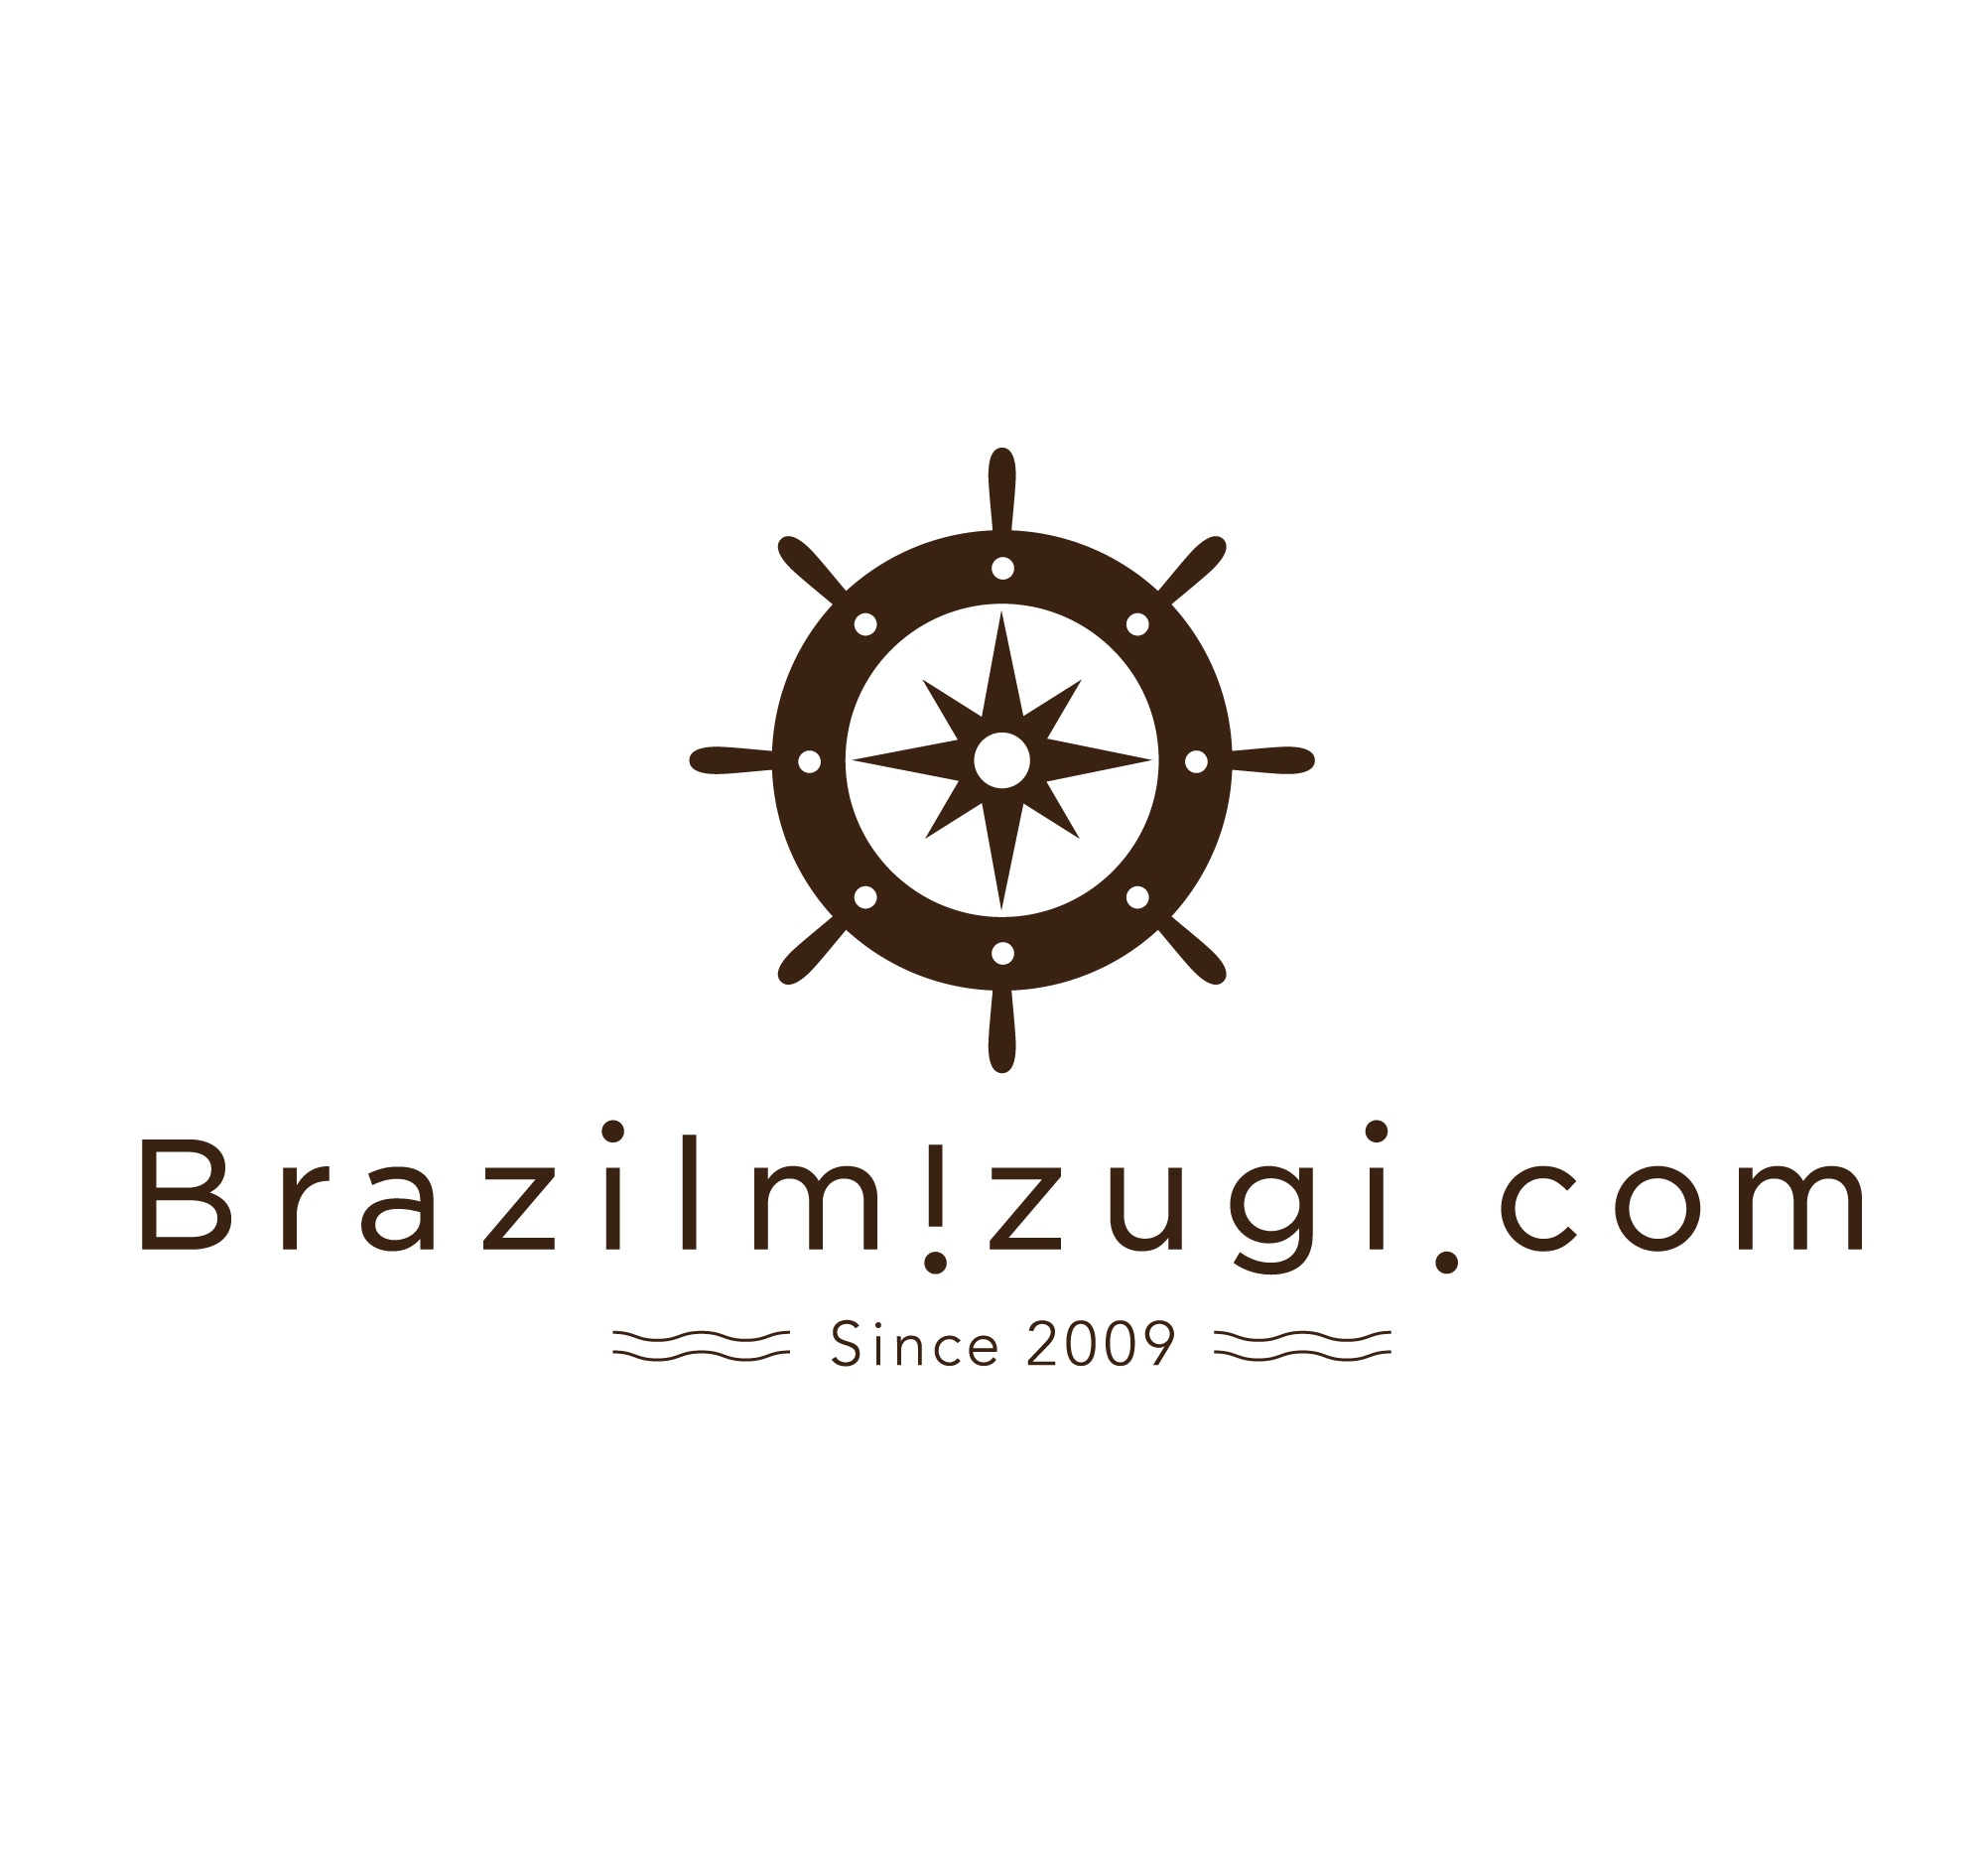 Brazilmizugi.com ブラジリアンビキニショップ